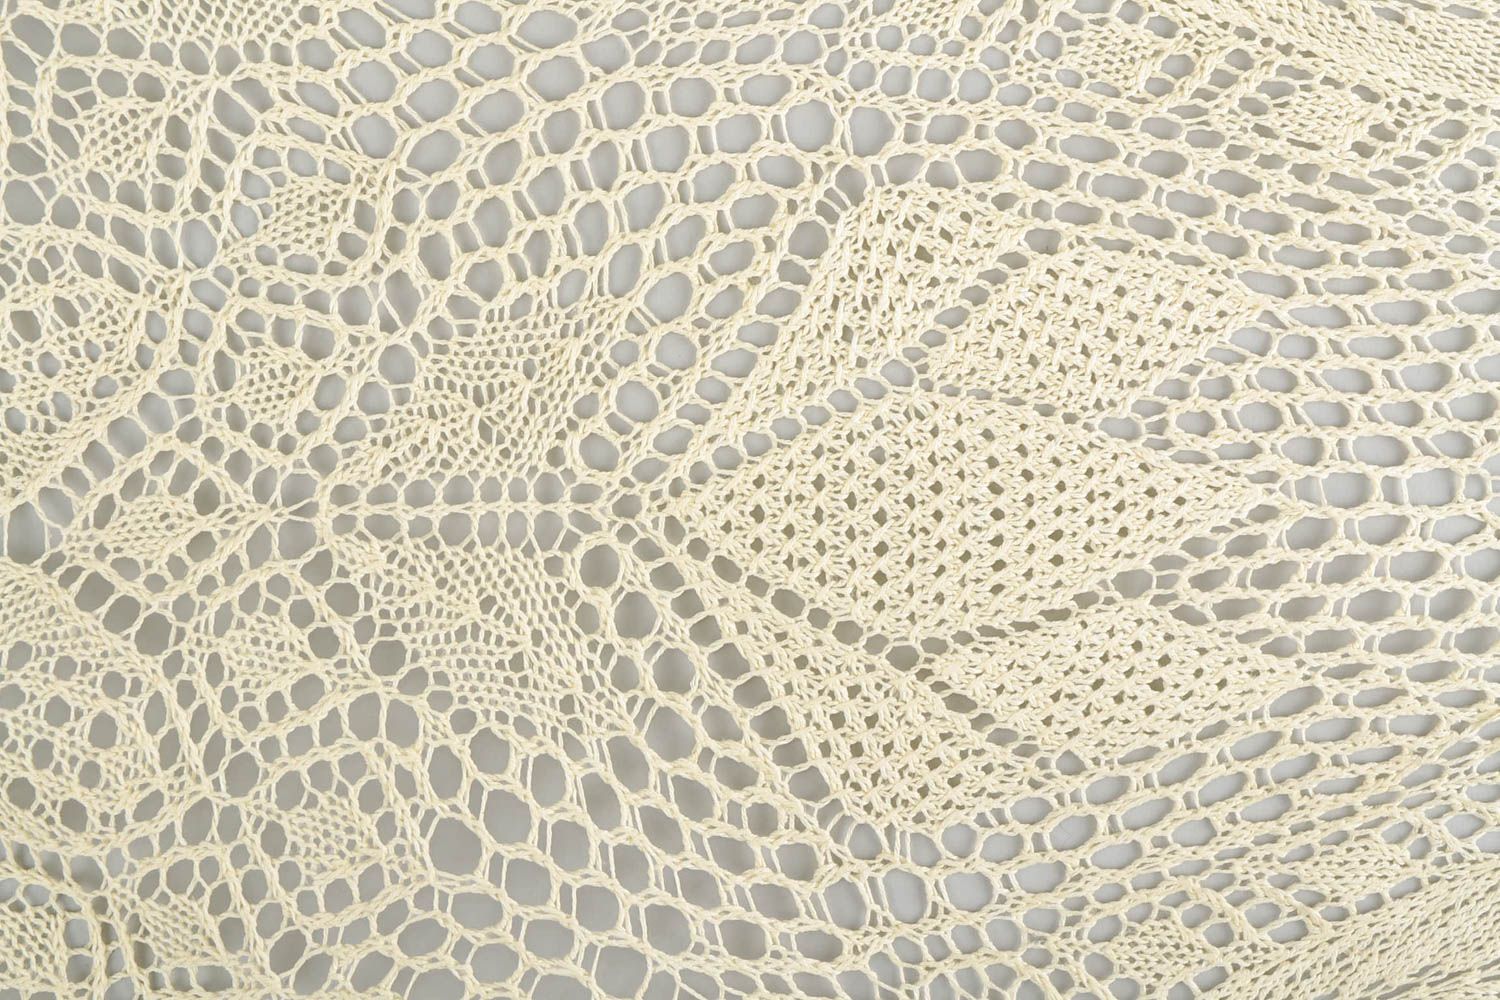 Openwork crochet tablecloth handmade lace napkin vintage style home ideas photo 2